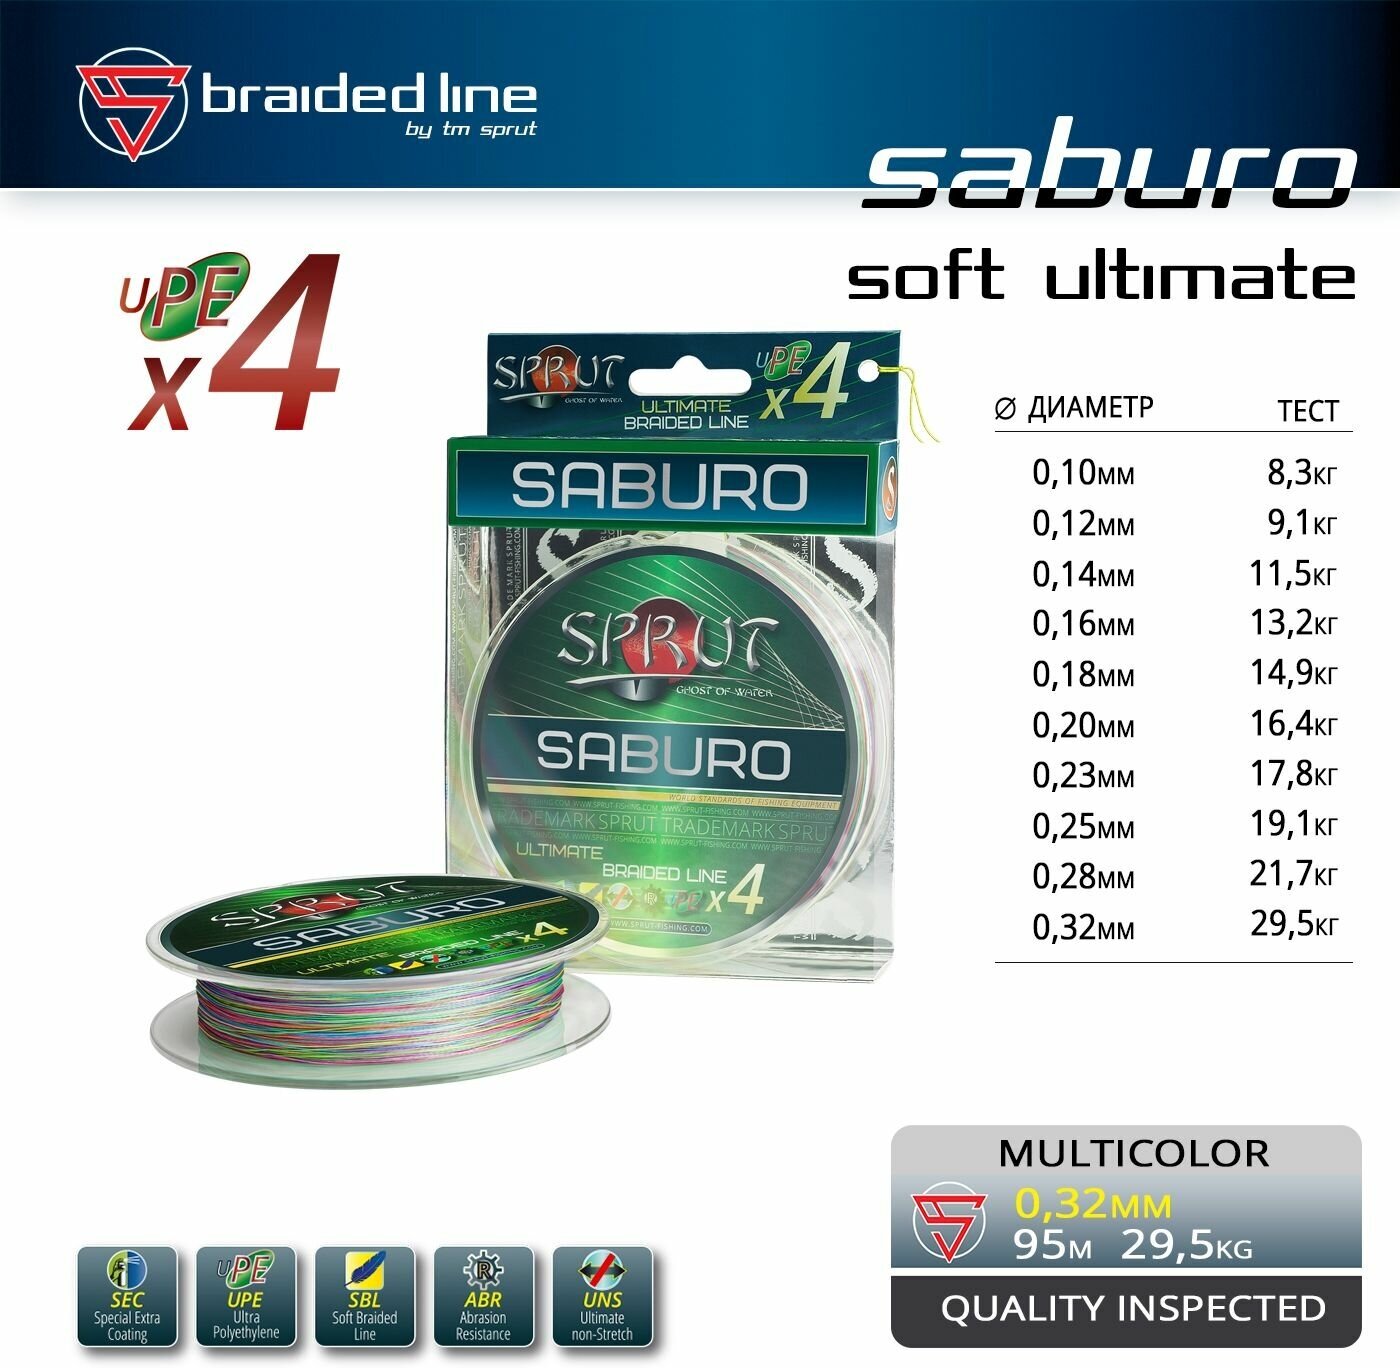 Шнур / Sprut Saburo 95m (Multicolor/032mm/295kg)